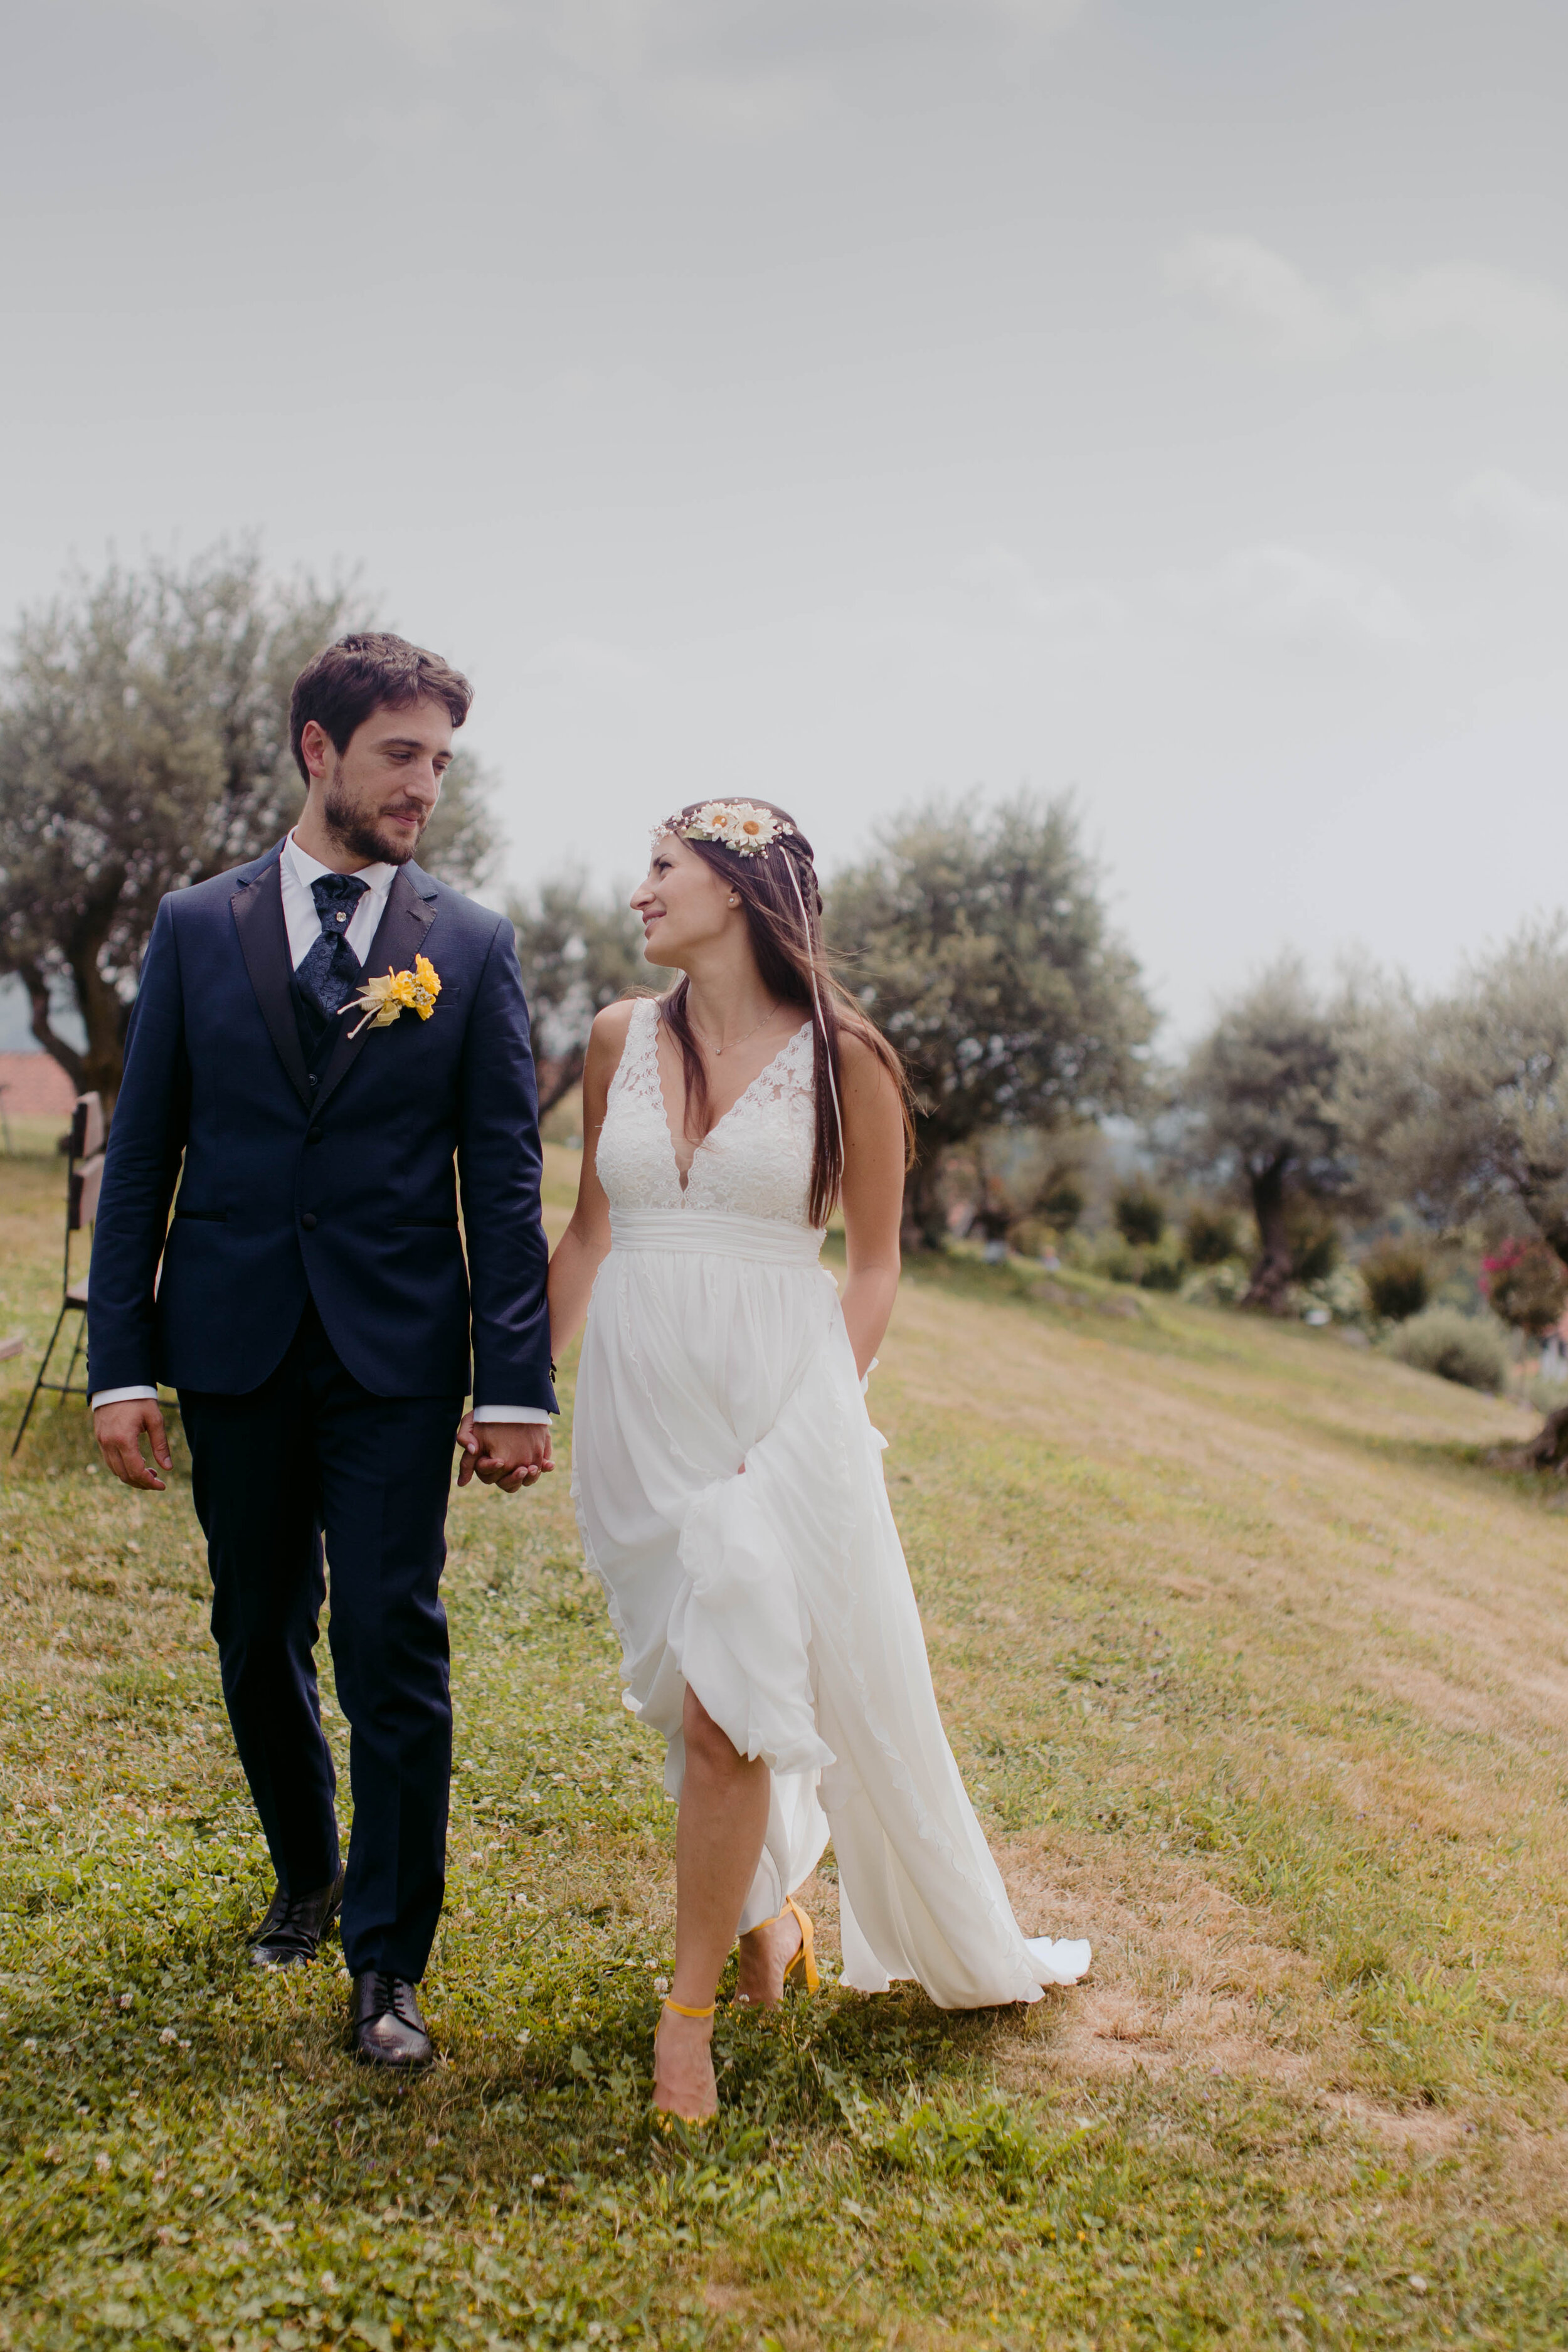 043 - Matrimonio a Cascina Rovet - Biella - Miriam Callegari Fotografa.JPG